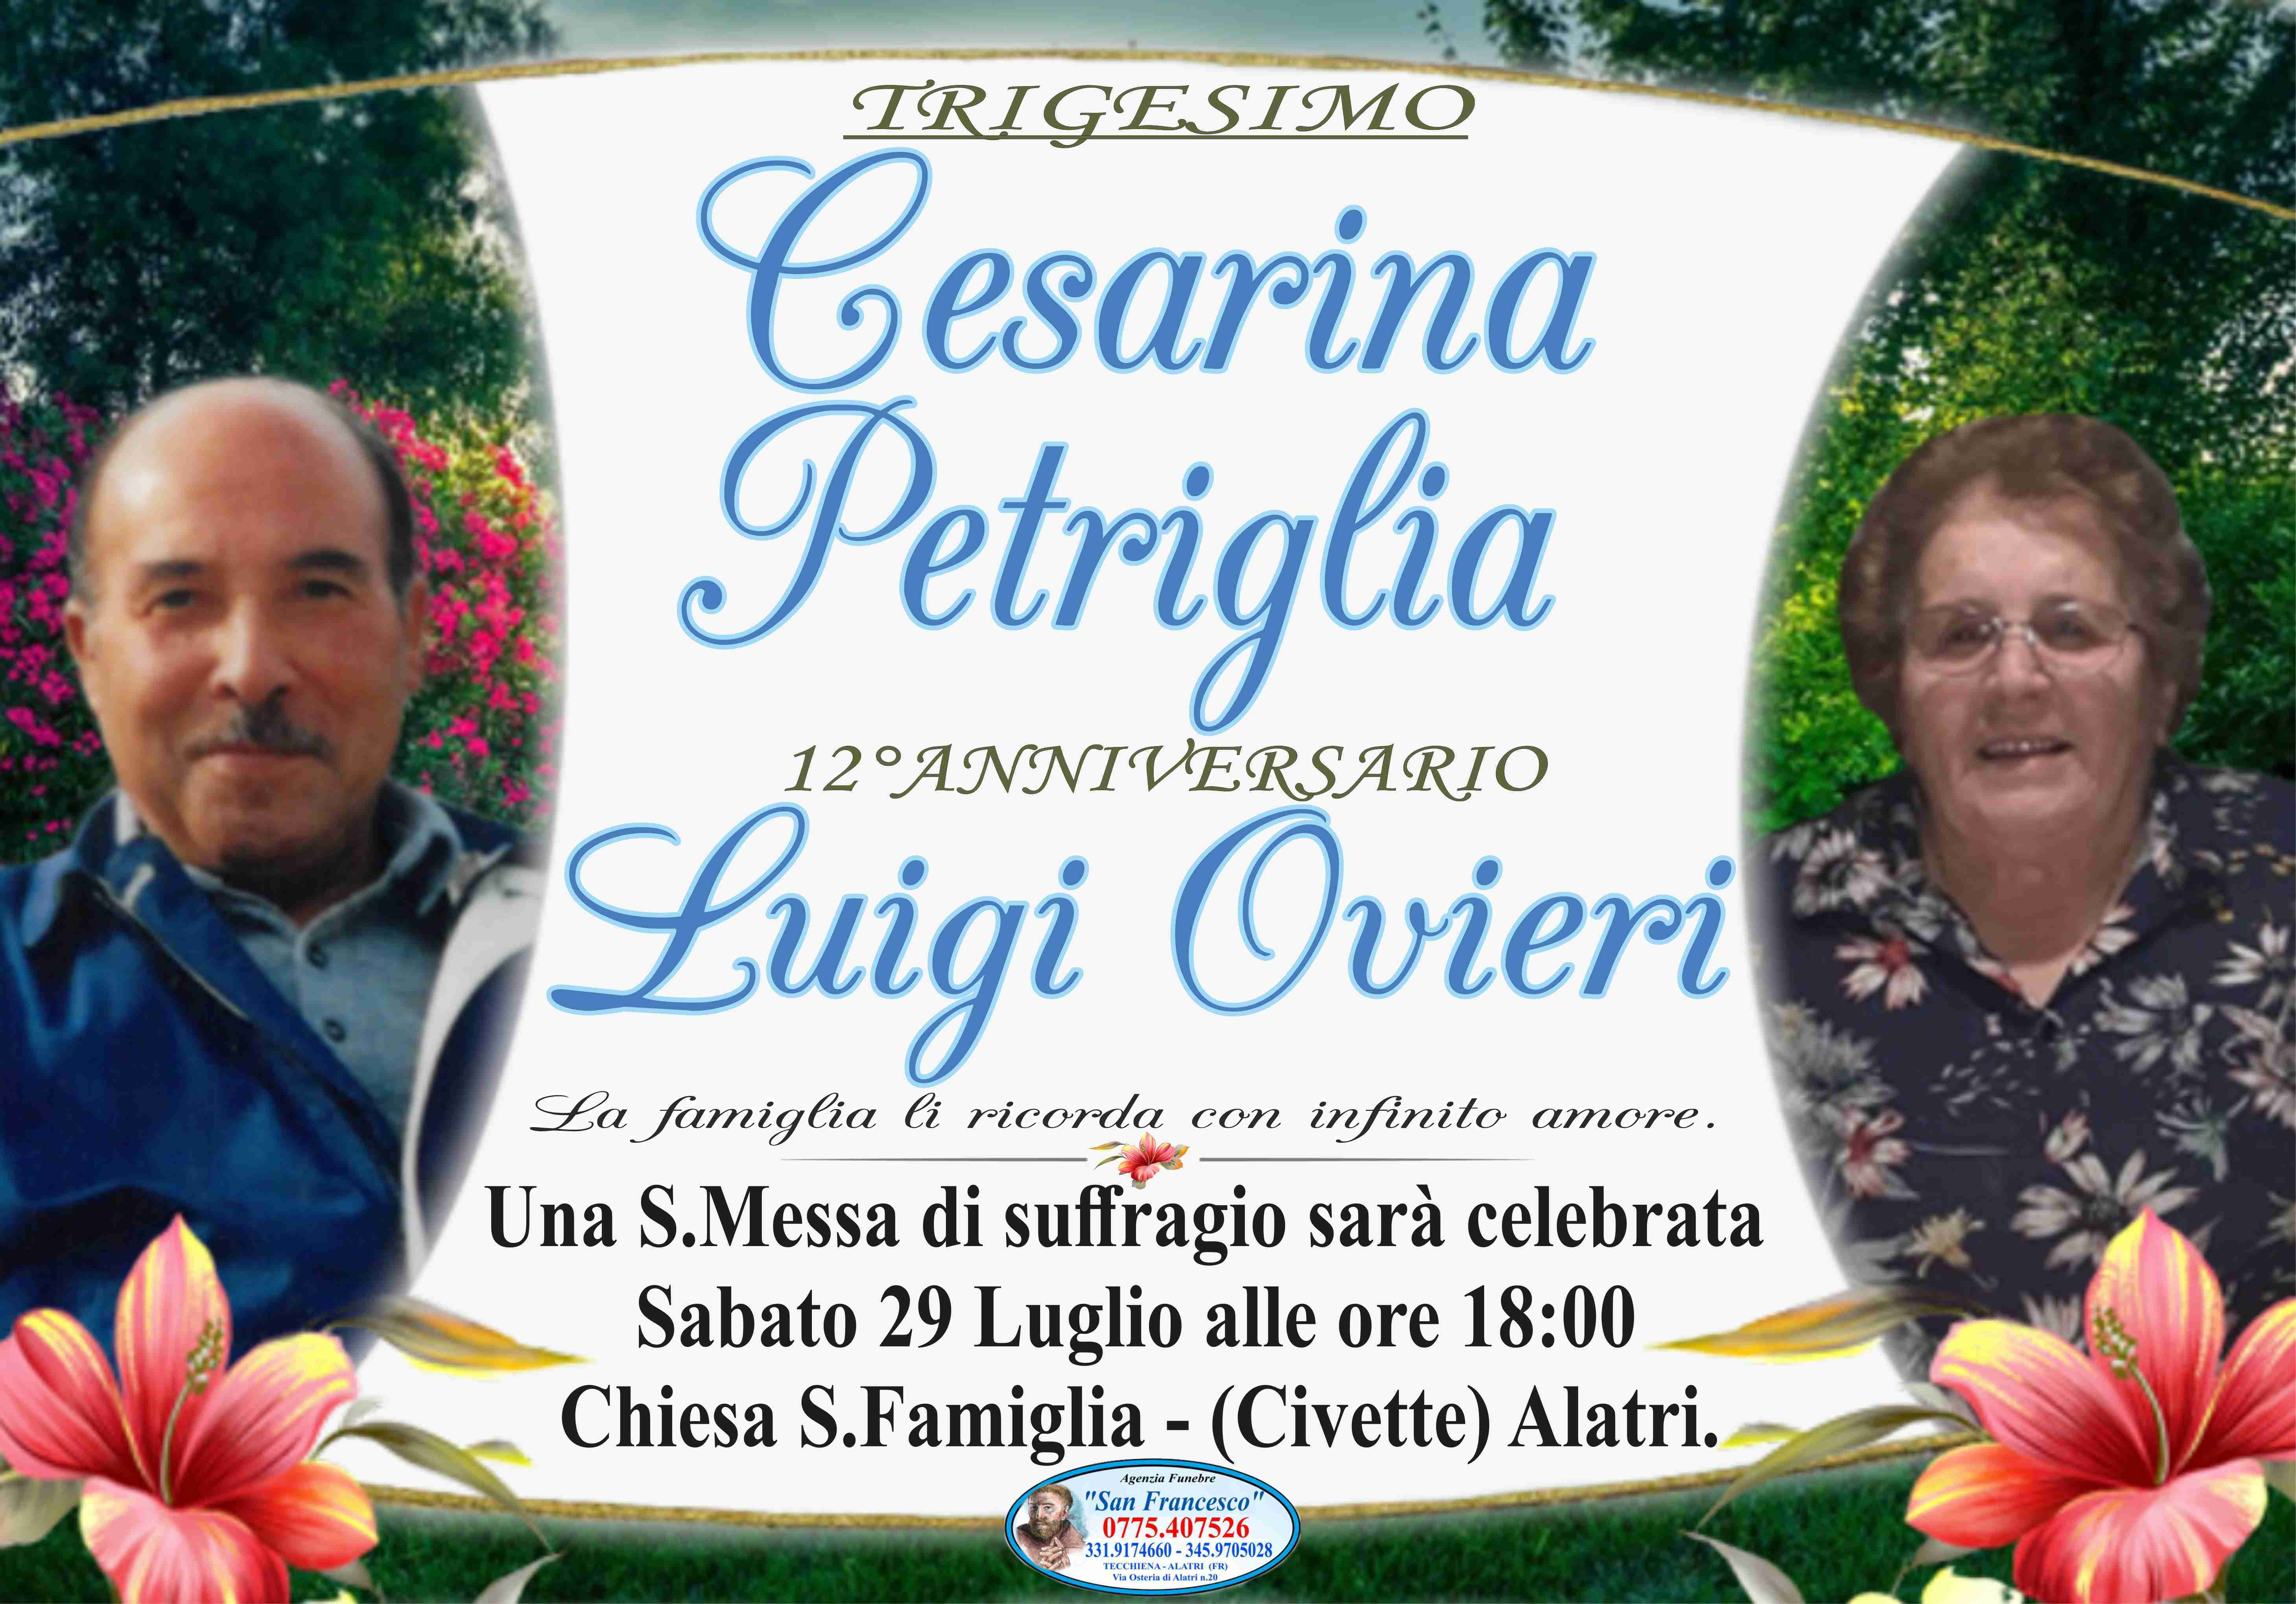 Cesarina Petriglia e Luigi Ovieri